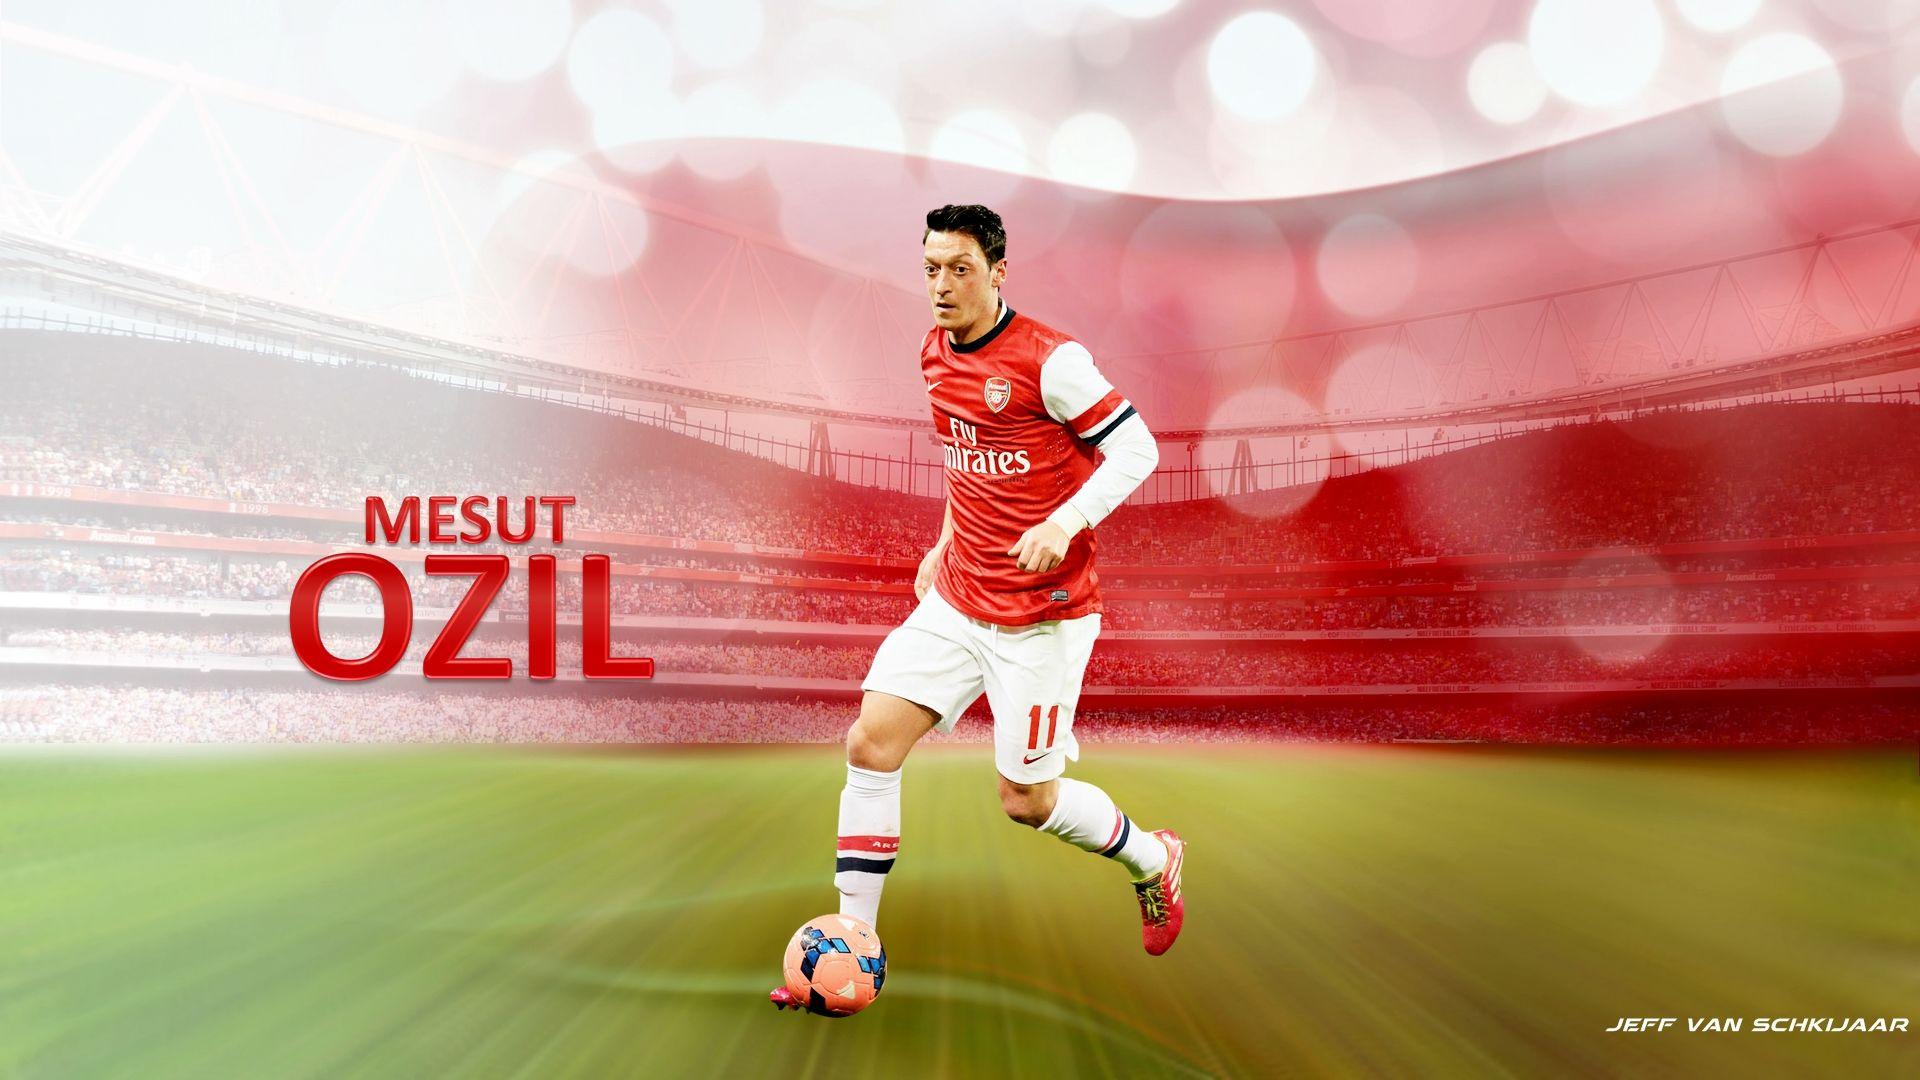 Mesut Ozil Arsenal Wallpaper HD 2014. Football Wallpaper HD